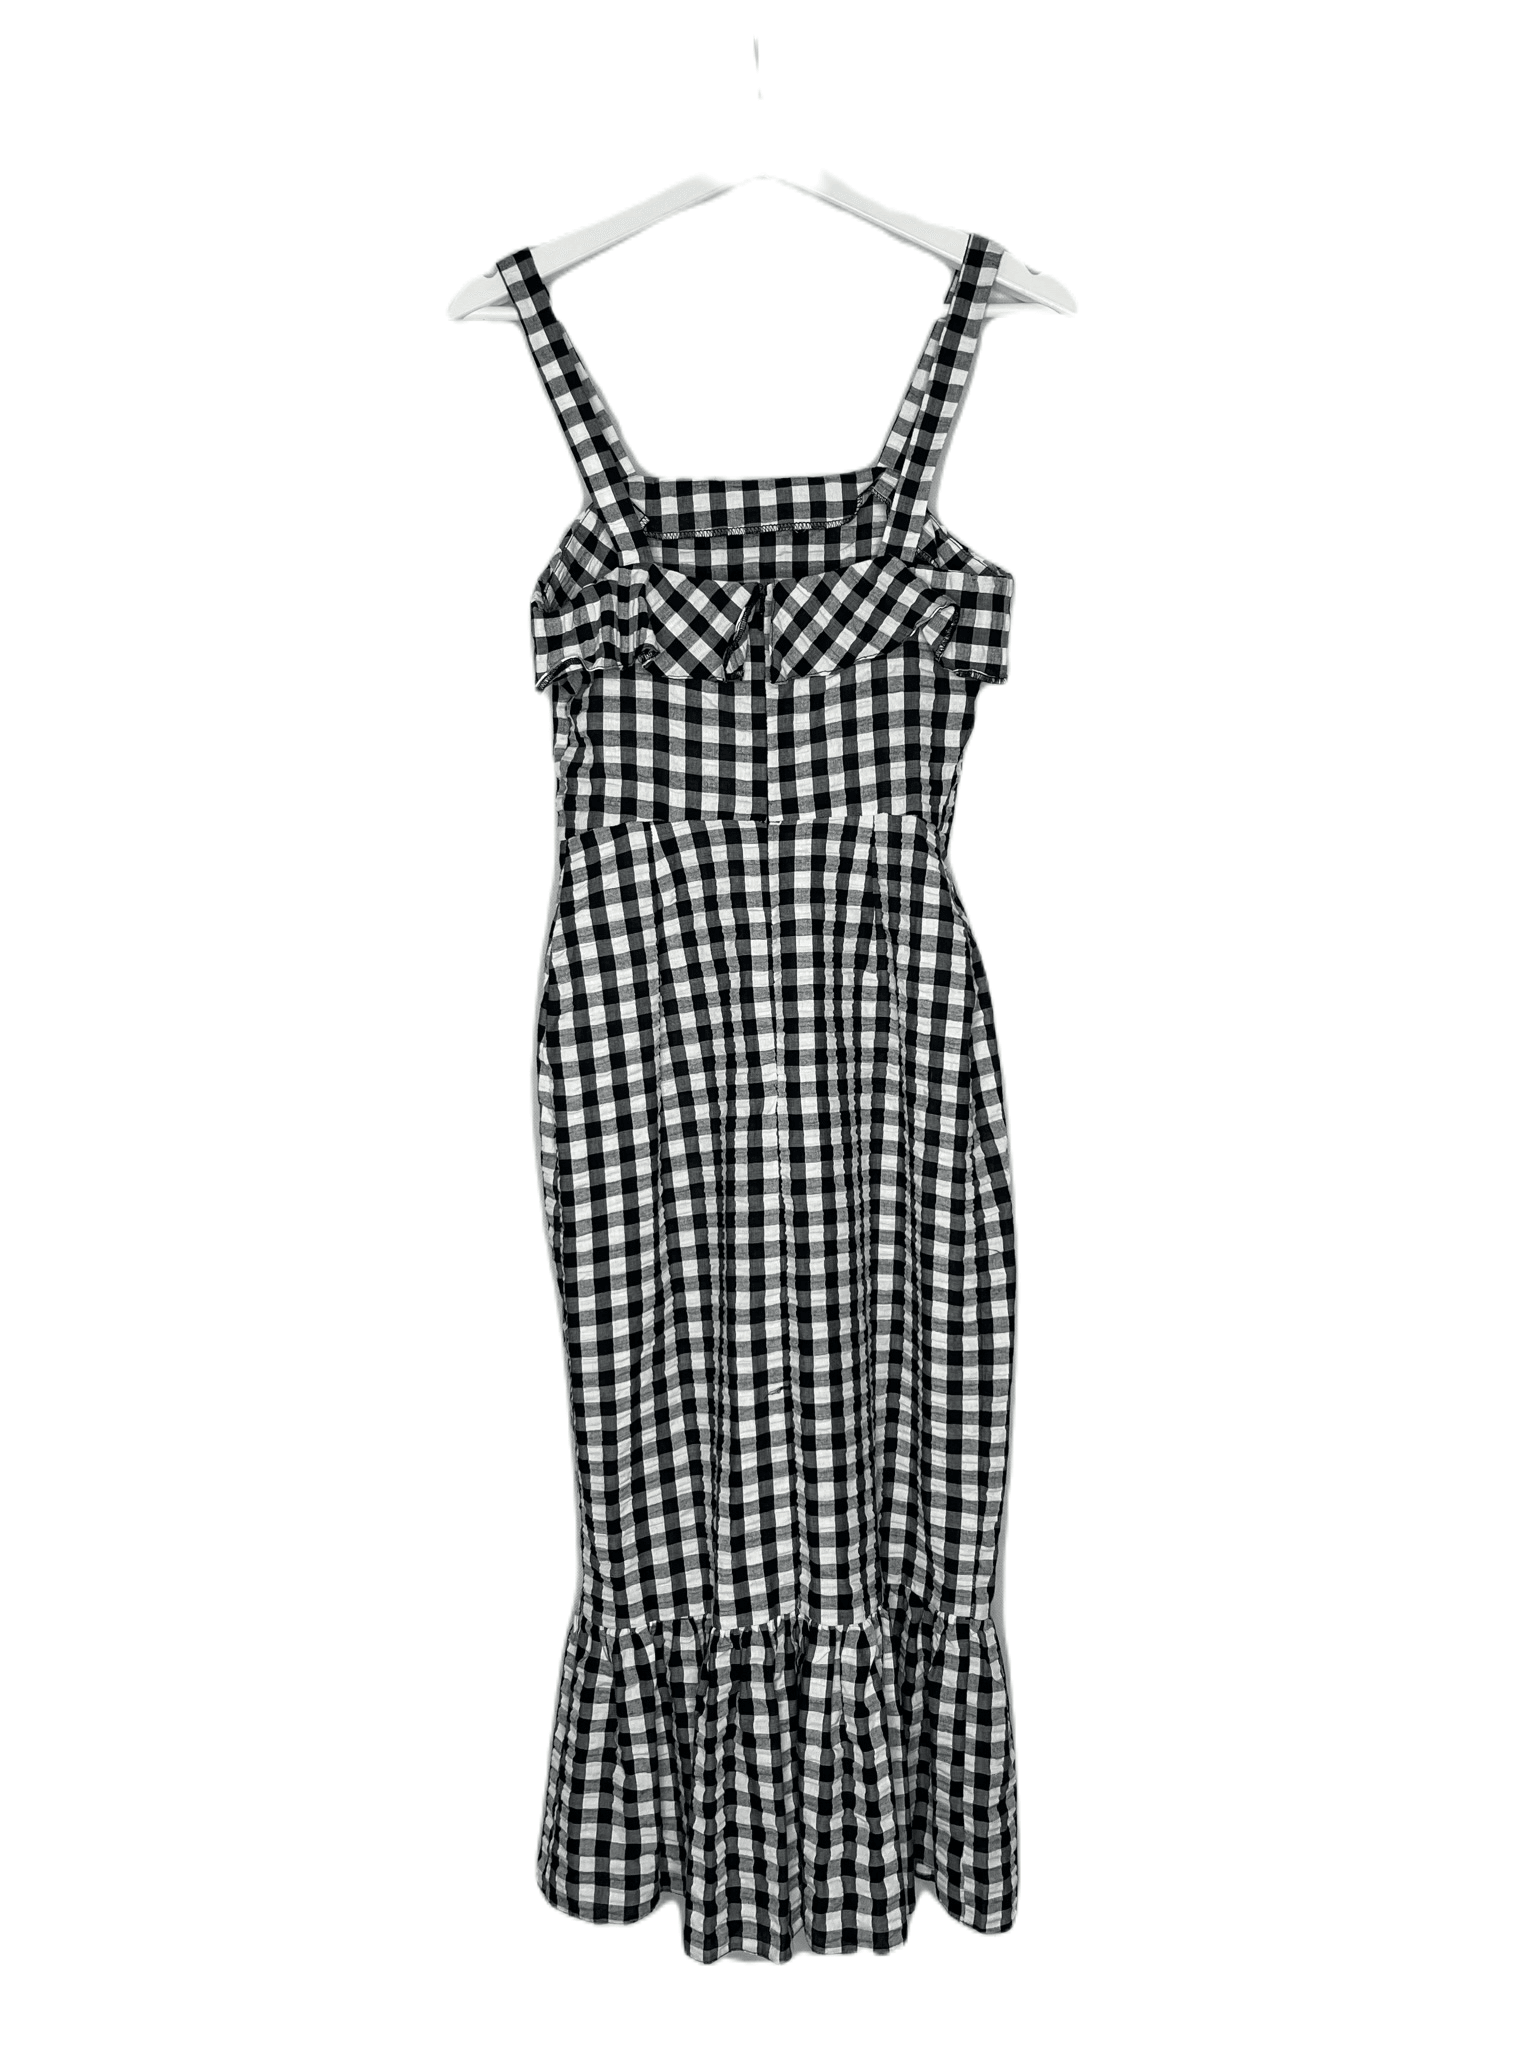 Gingham Black and White Checked Midi Dress - Endless